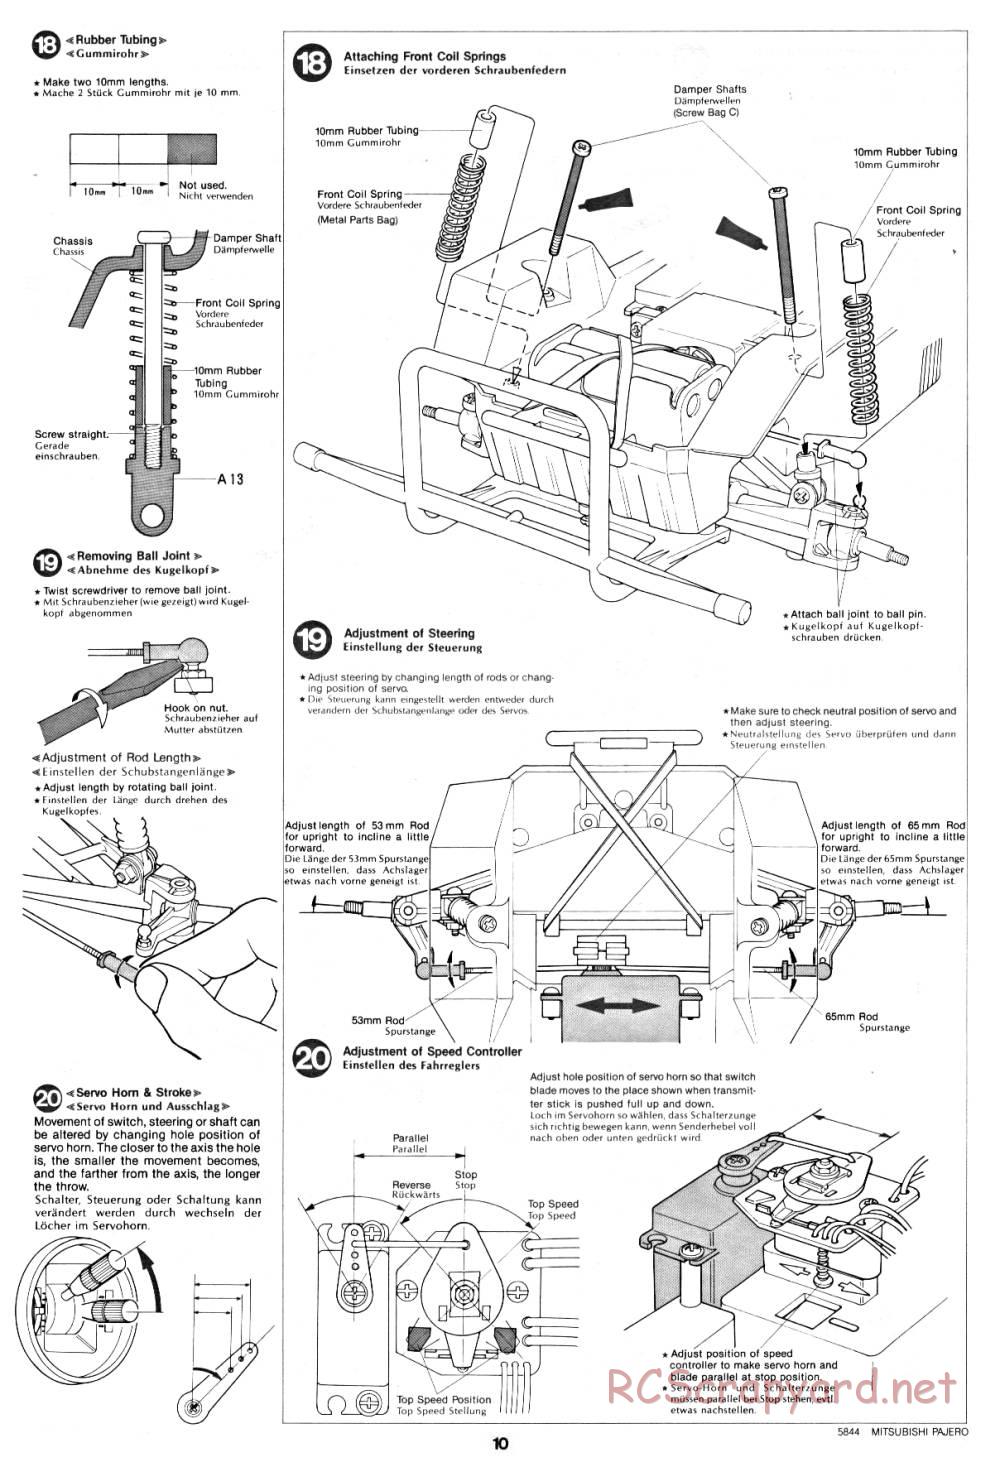 Tamiya - Mitsubishi Pajero - 58044 - Manual - Page 10